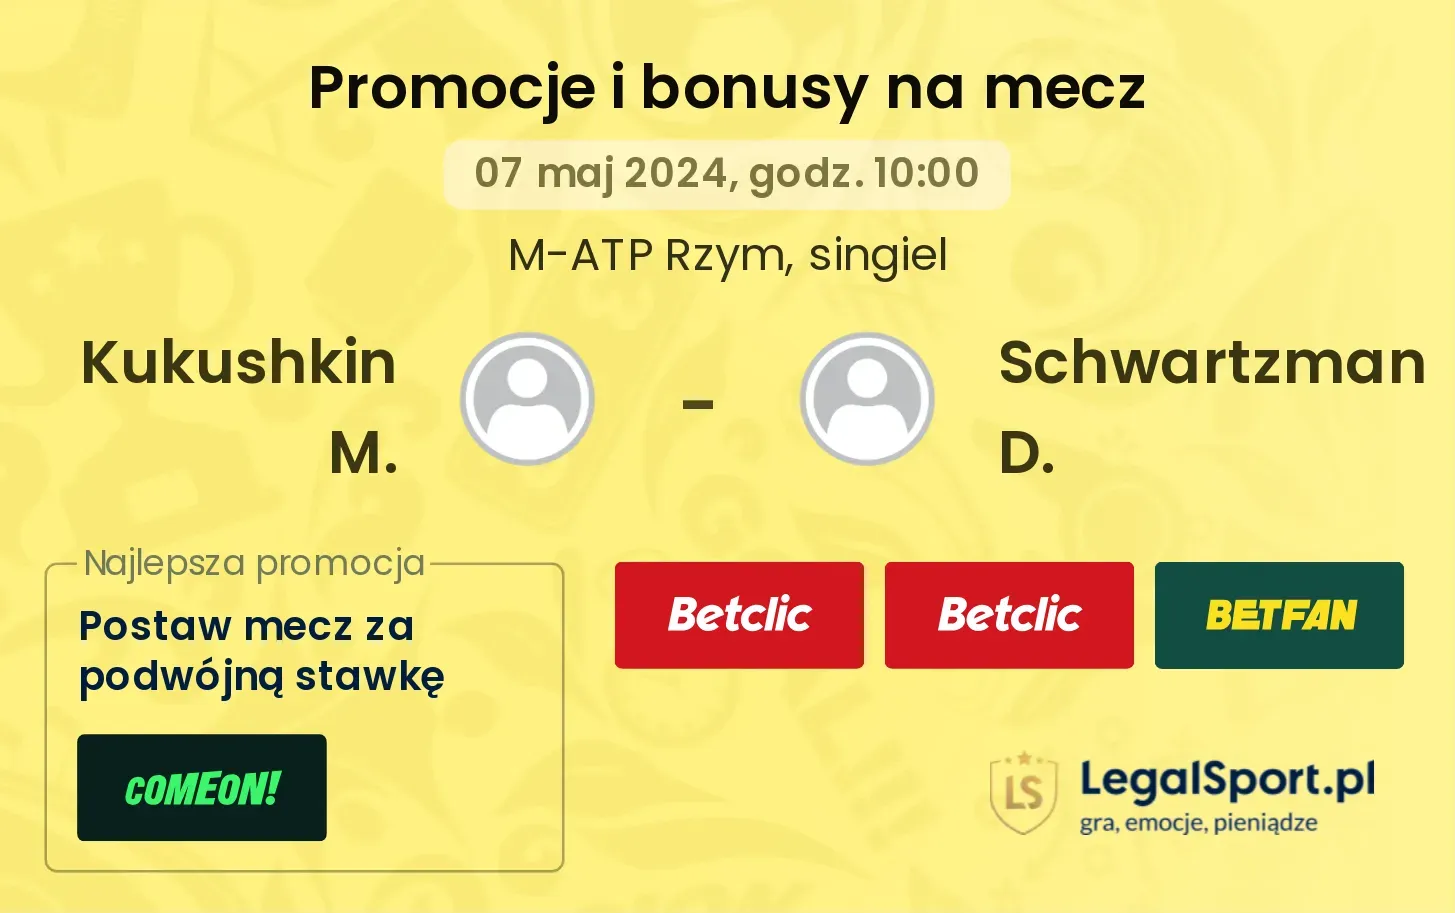 Kukushkin M. - Schwartzman D. promocje bonusy na mecz